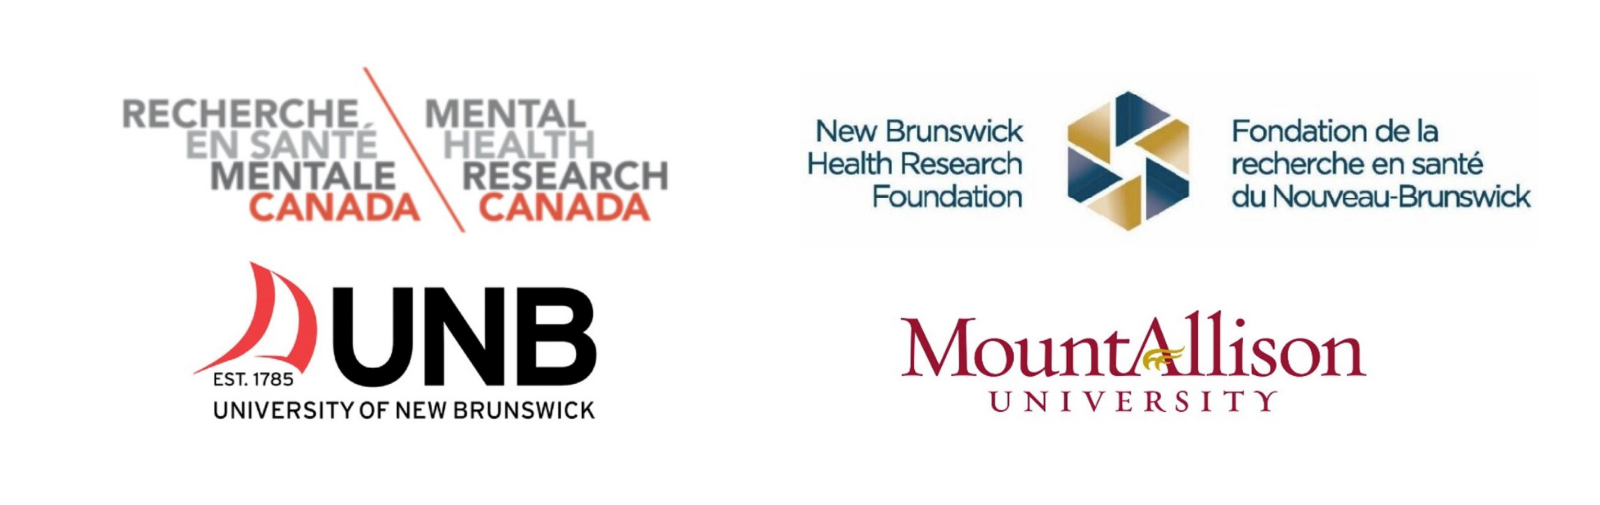 Logos: Mental Health Research Canada, New Brunswick Health Research Foundation, UNB, Mount Allison University